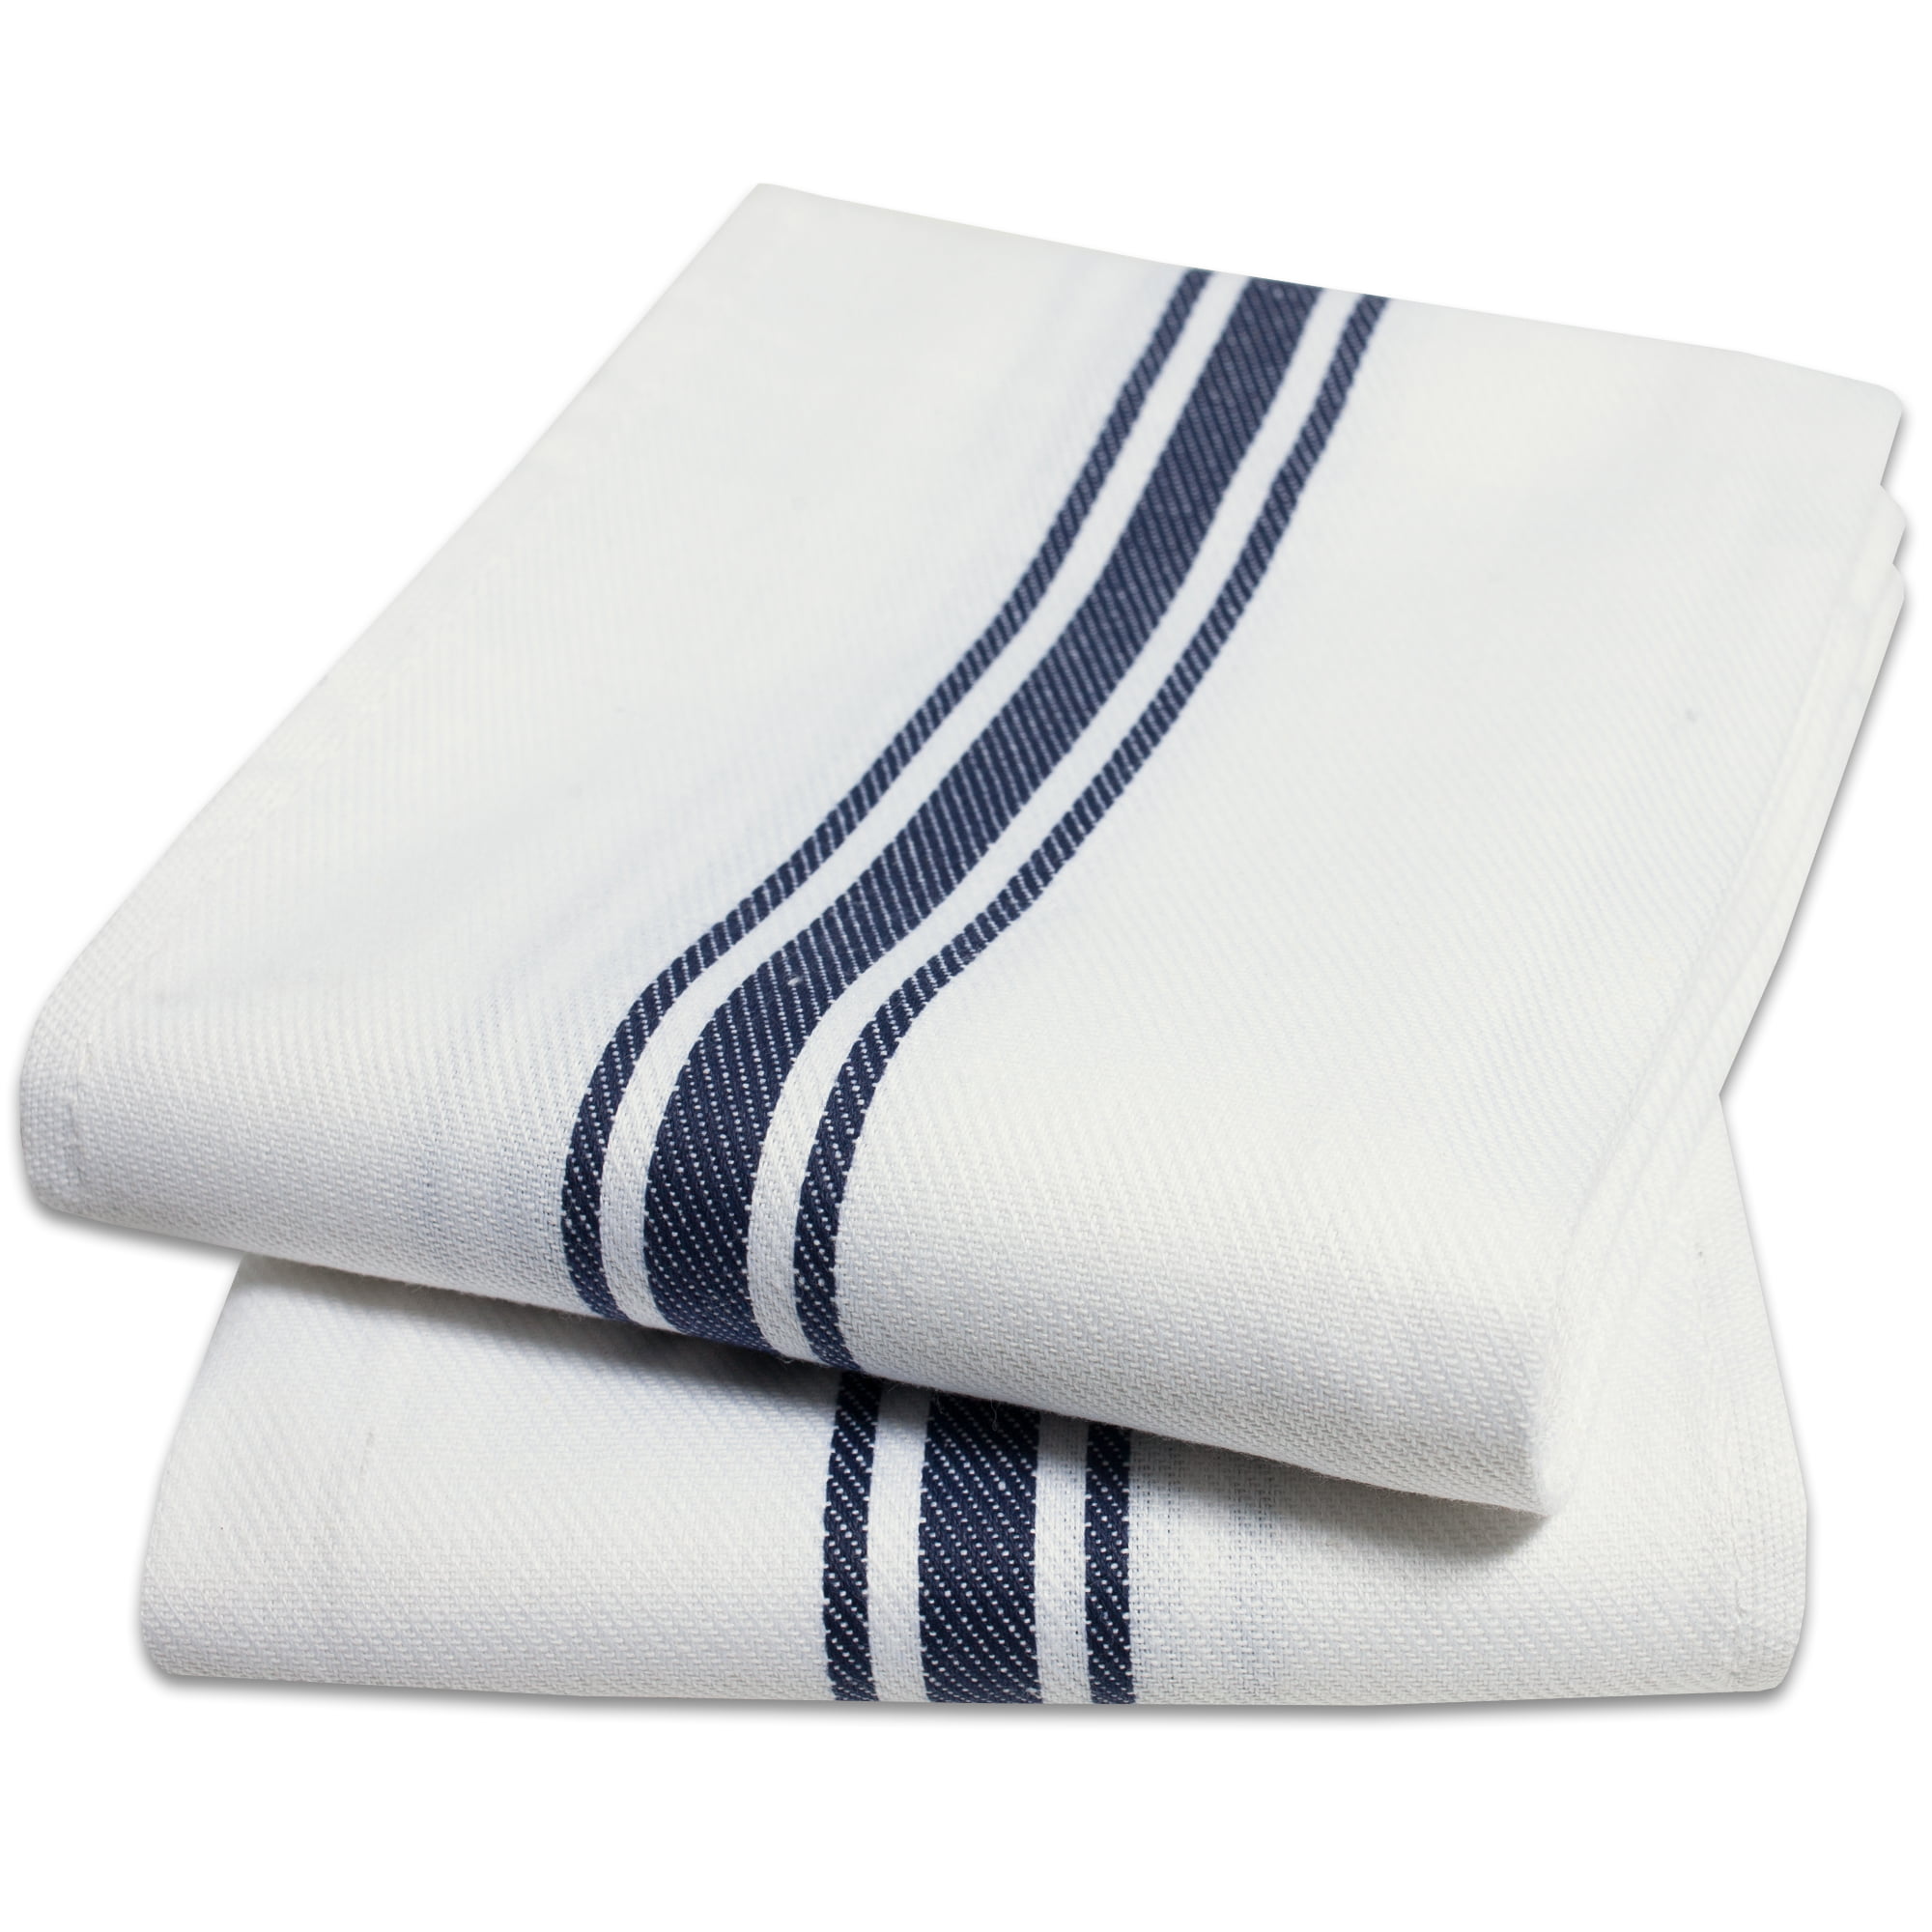 15 x 26 Premium Low Lint Herringbone Towel (blue pinstripe, 300